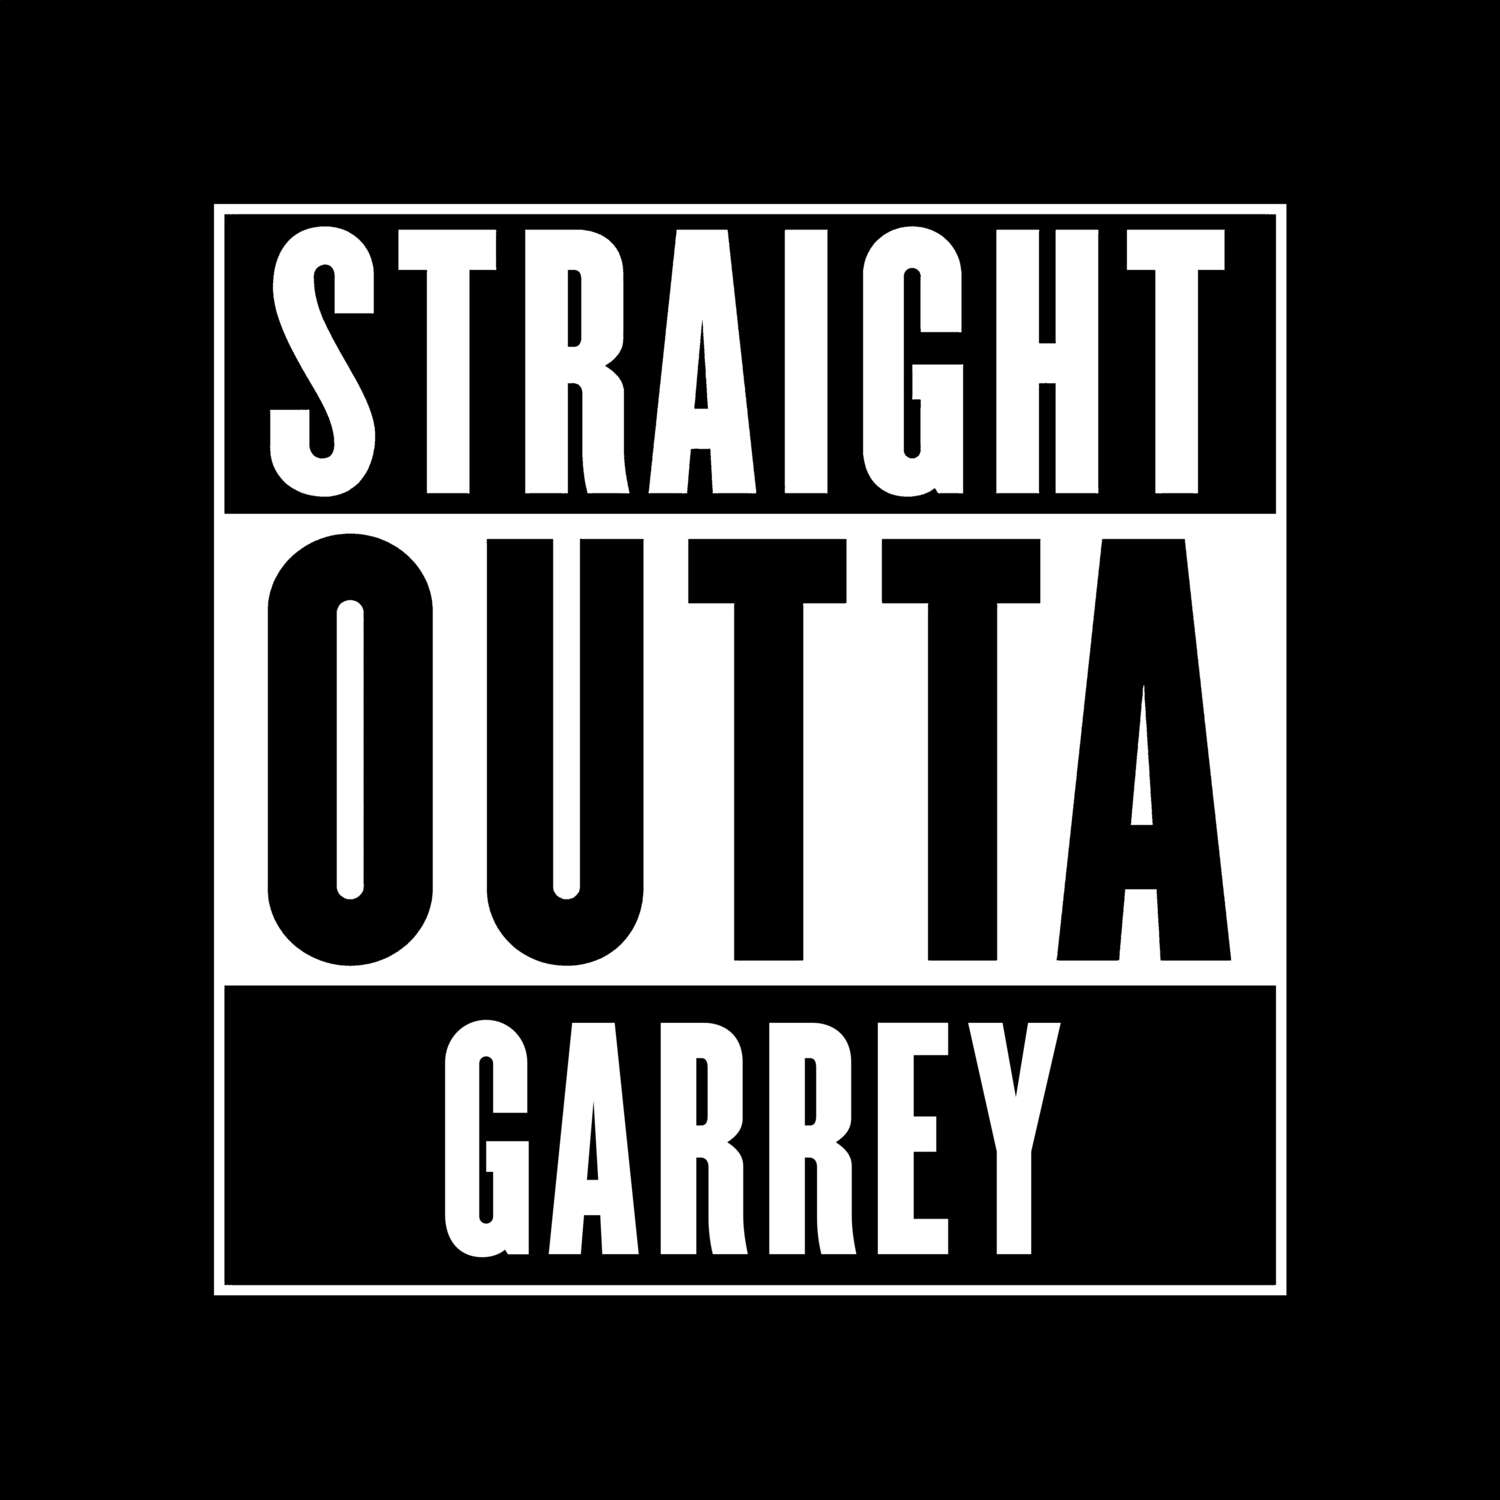 Garrey T-Shirt »Straight Outta«